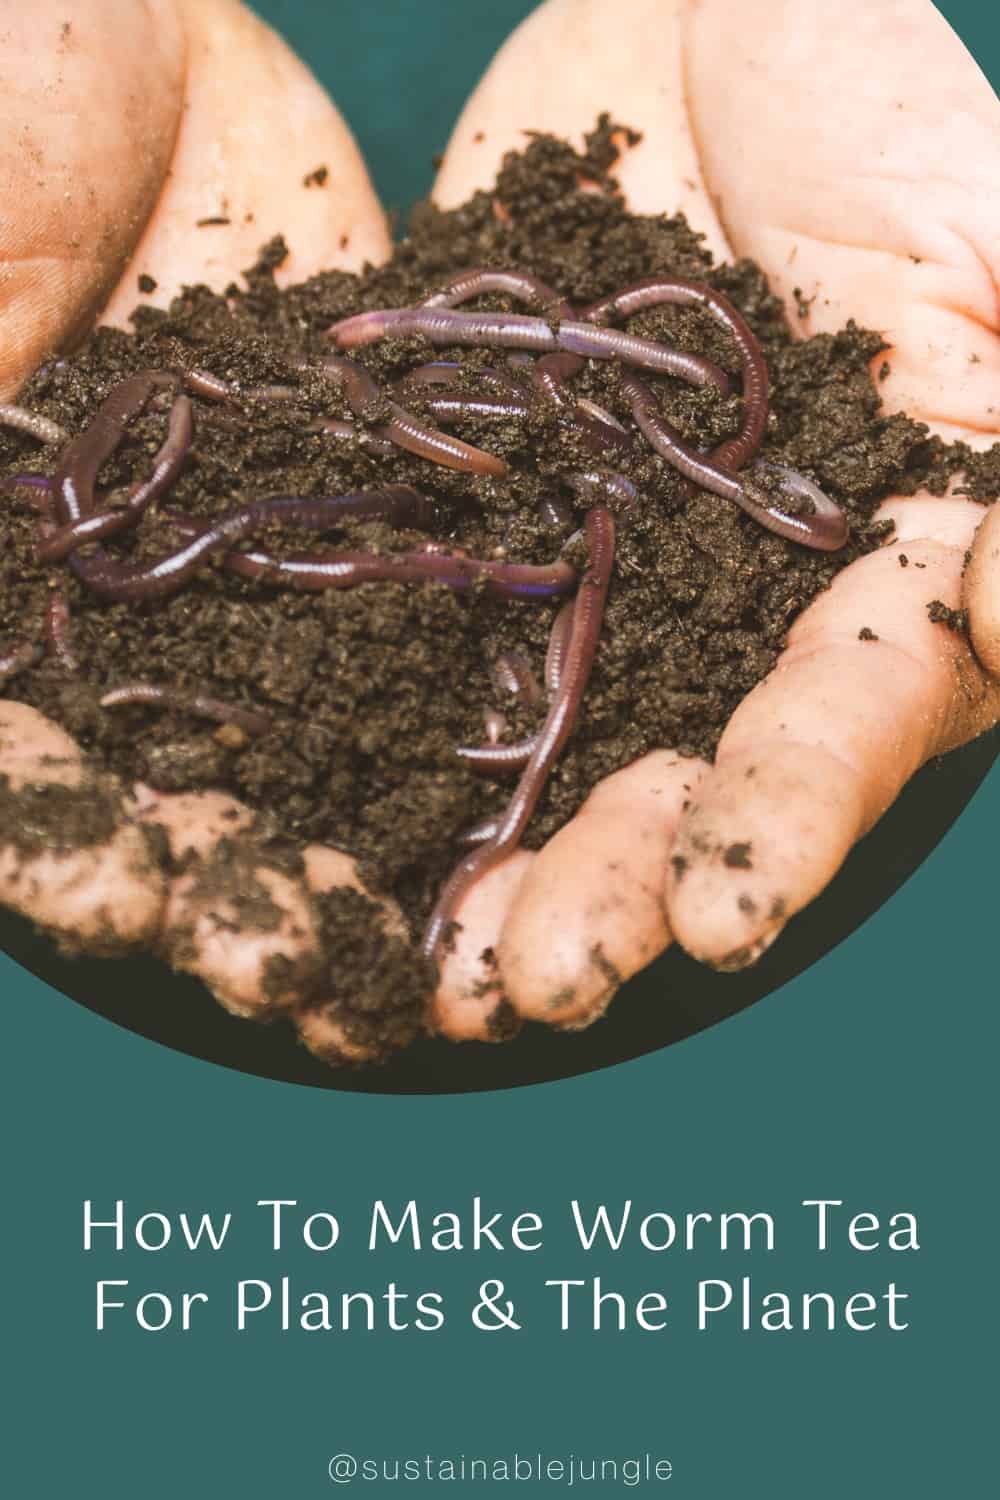 How To Make Worm Tea For Plants & The Planet #wormtea #whatiswormtea #wormcastingtea #howtomakewormtea #benefitsofwormtea #wormteaforplants #sustainablejungle Image by Sippakorn Yamkasikorn via Pexels on Canva Pro